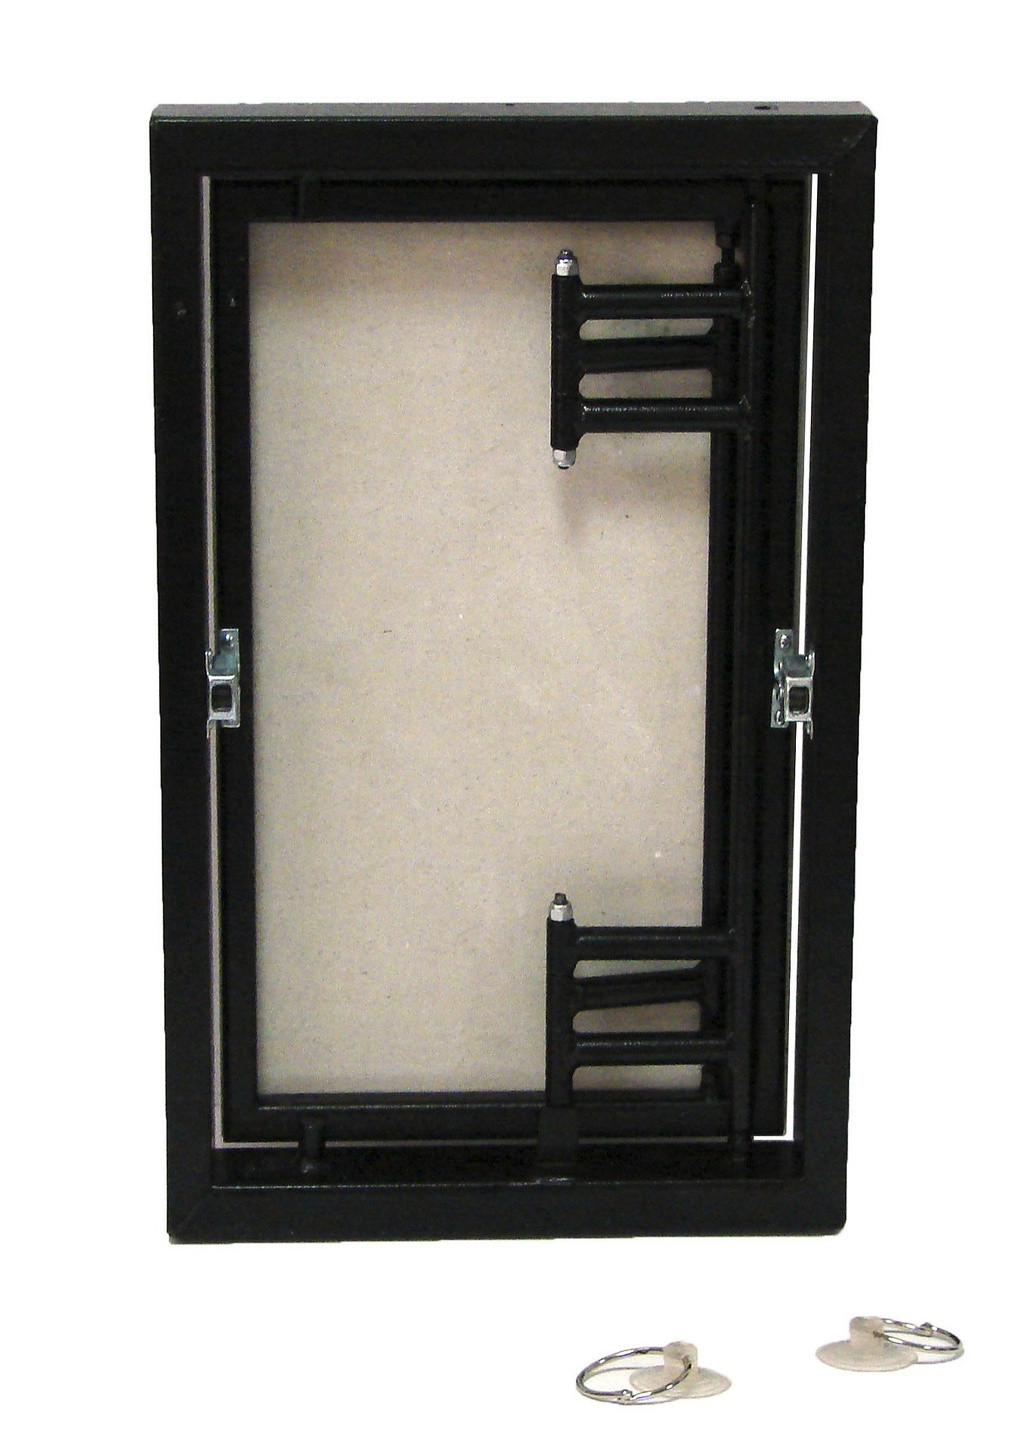 Ревизионный люк скрытого монтажа под плитку фронтальнораспашного типа 250x450 ревизионная дверца для плитки (1218) S-Dom (264208755)